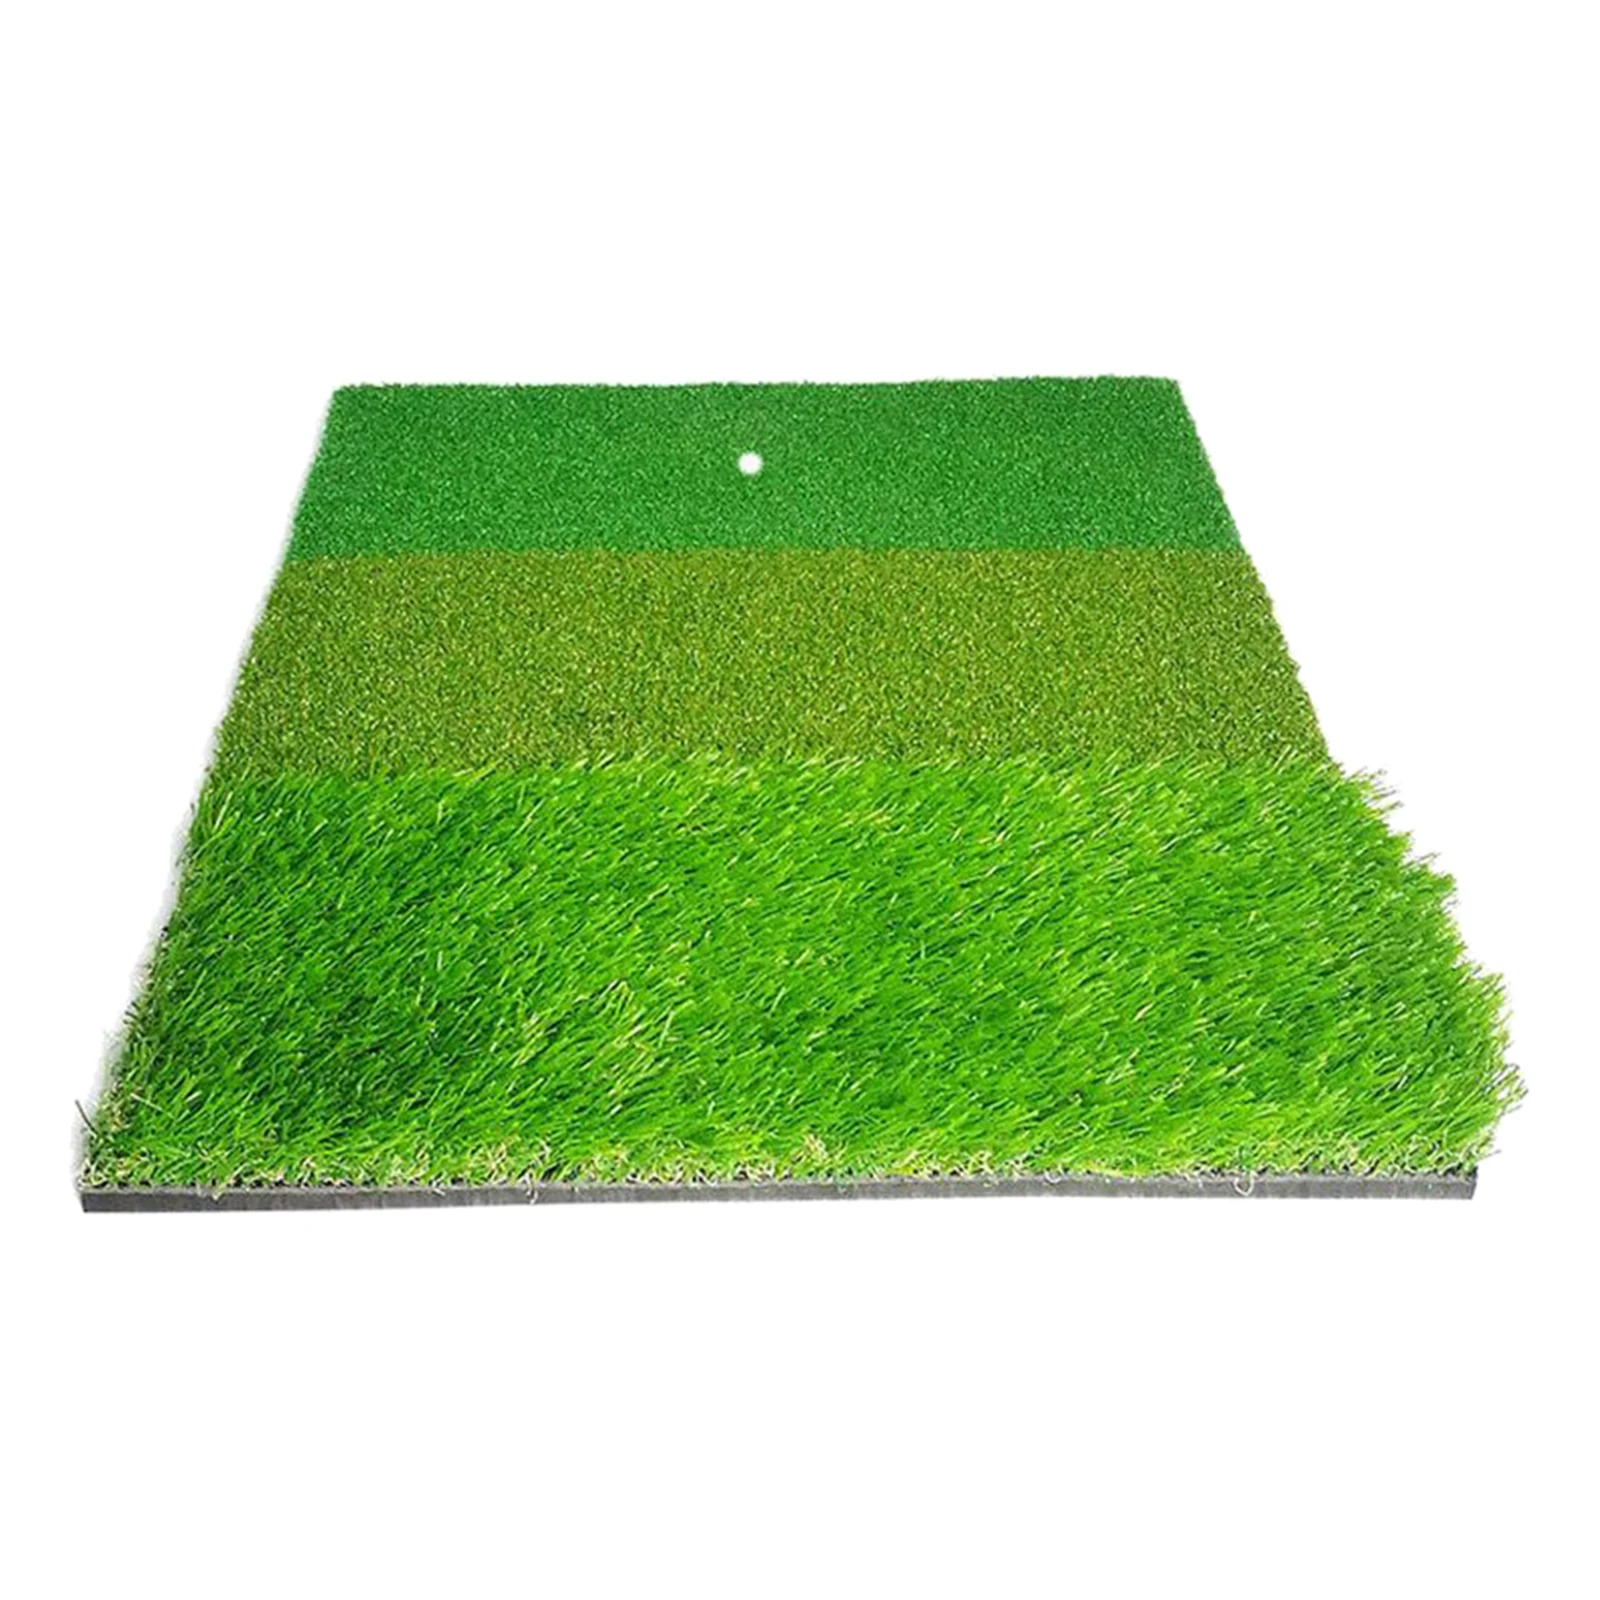 

Anti-Slip Golf Mat, 3-in-1 Golf Hitting Mat, Nylon Grass Turf Mat Pad, Golf Swing Chipping Practice Greens for Indoor/Outdoor